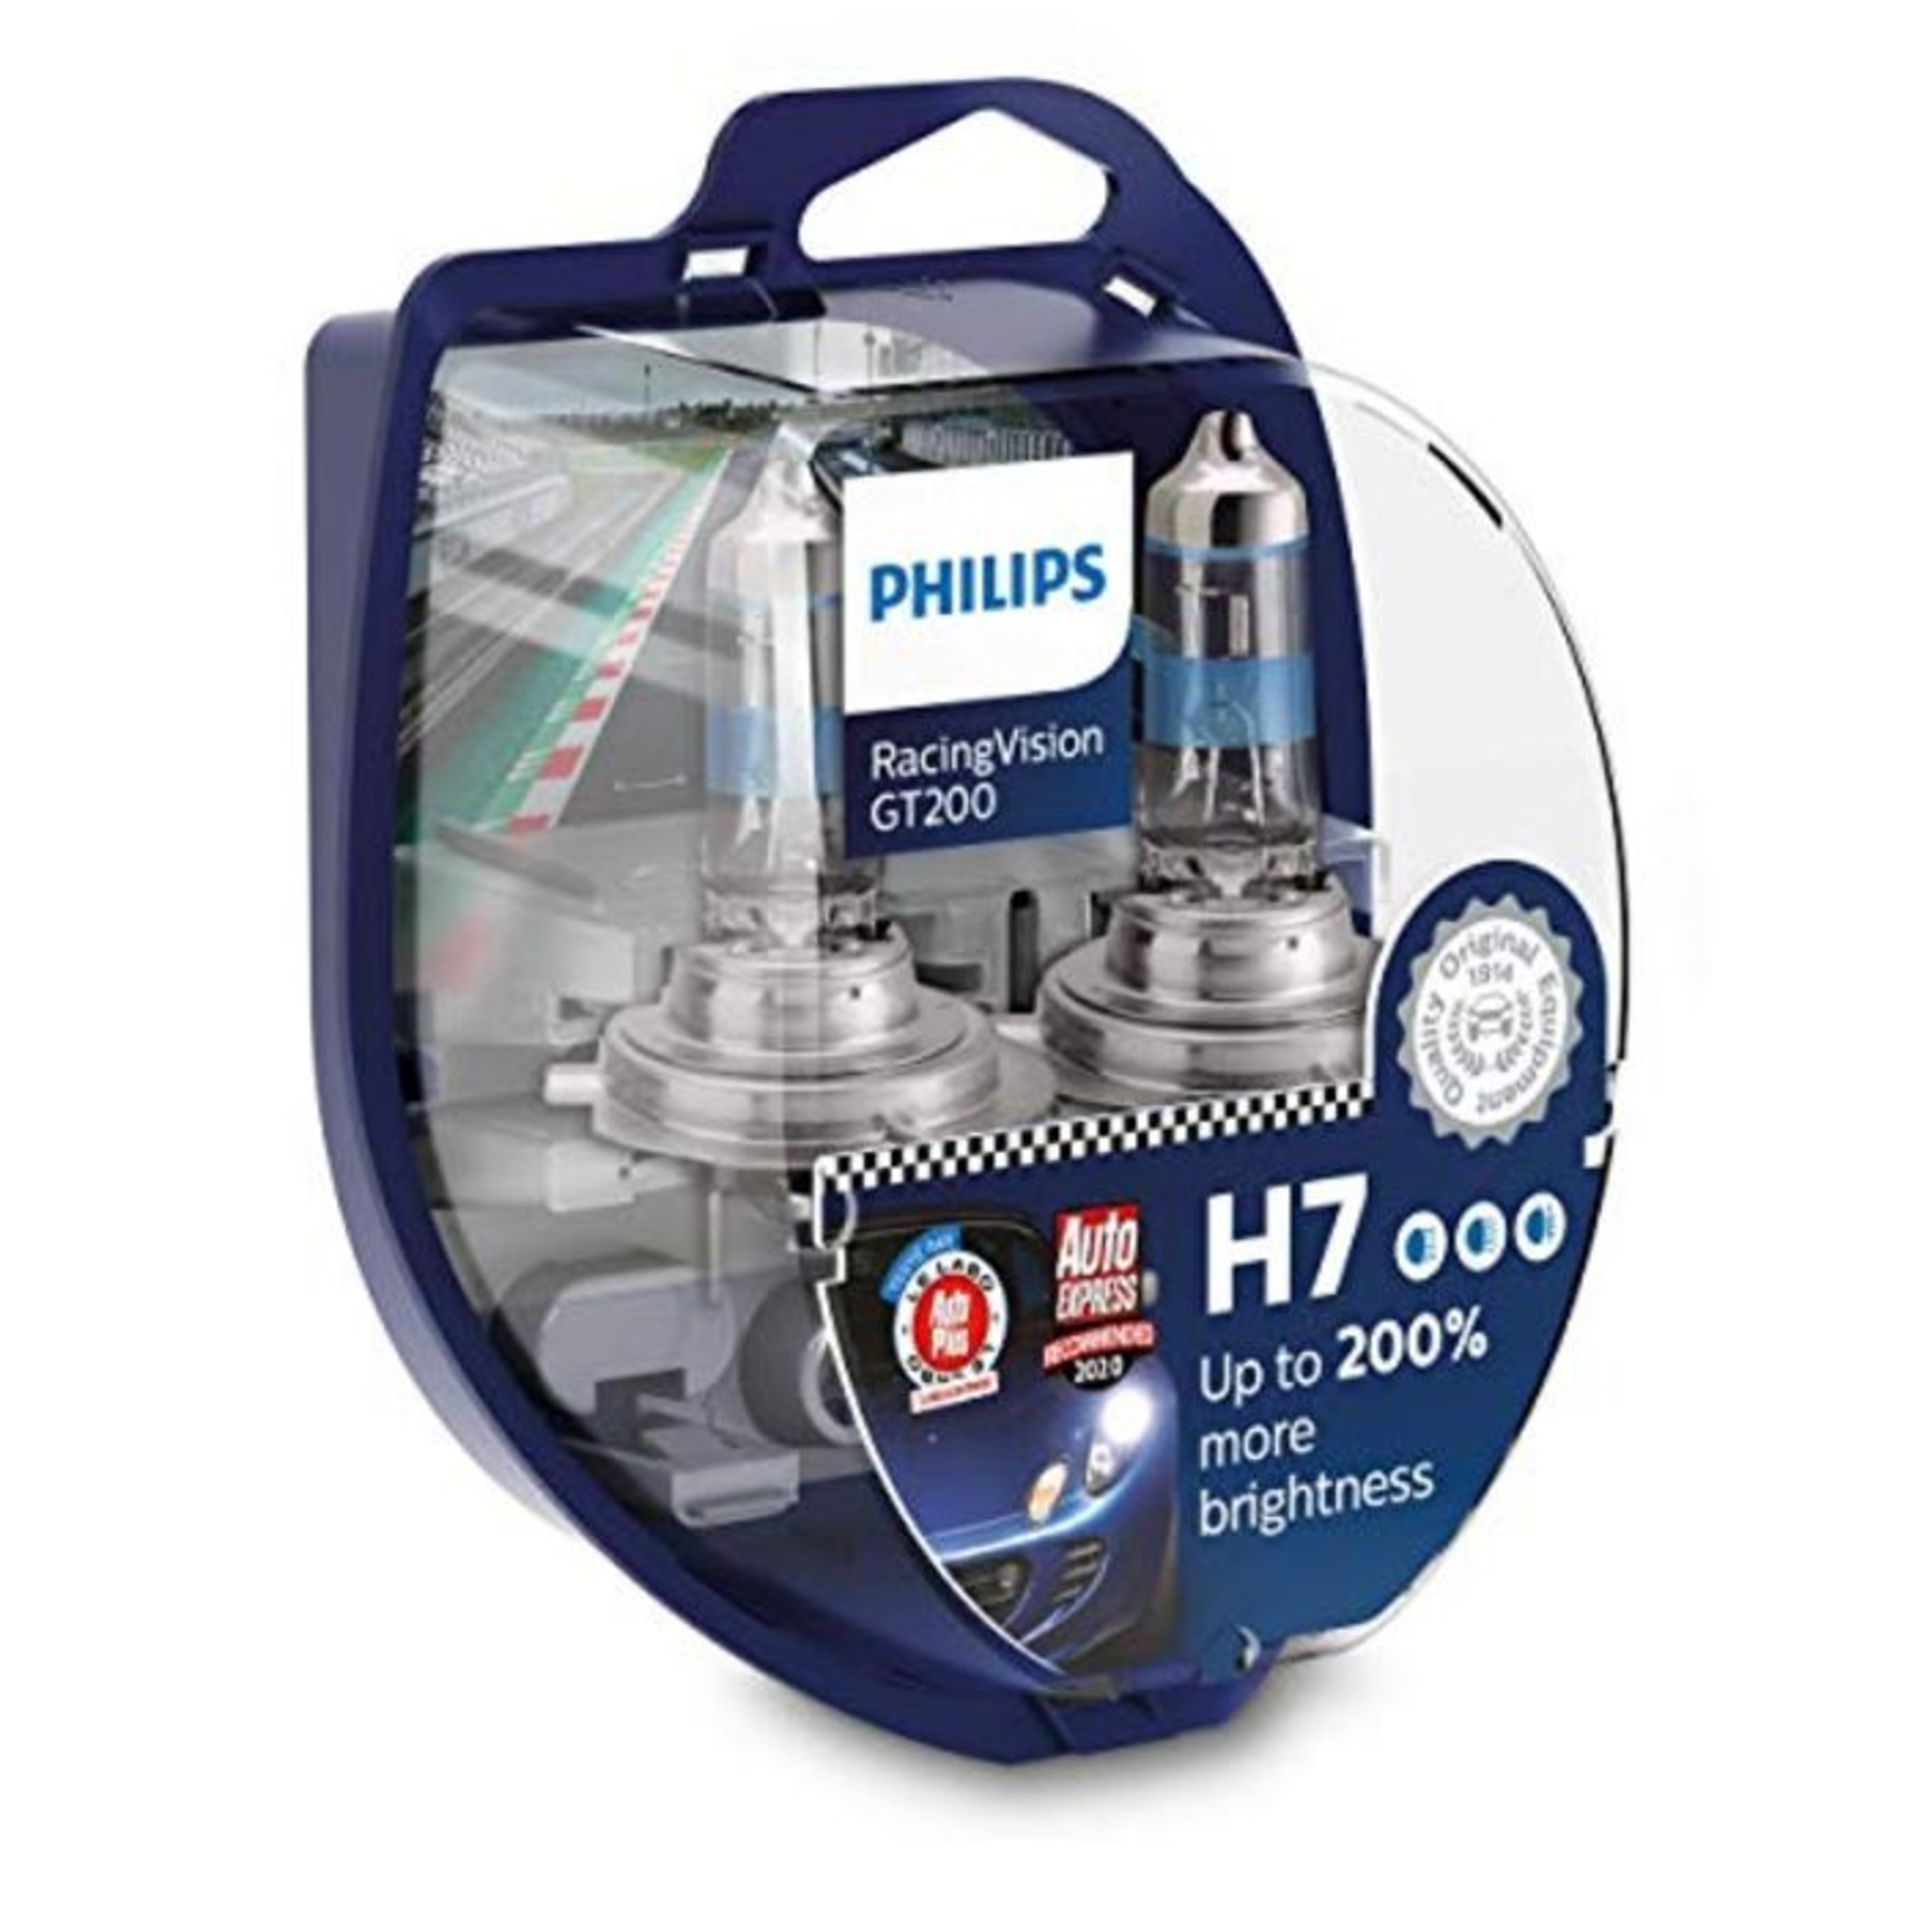 Philips 577928 RacingVision GT200 H7 car headlight bulb +200%, set of 2